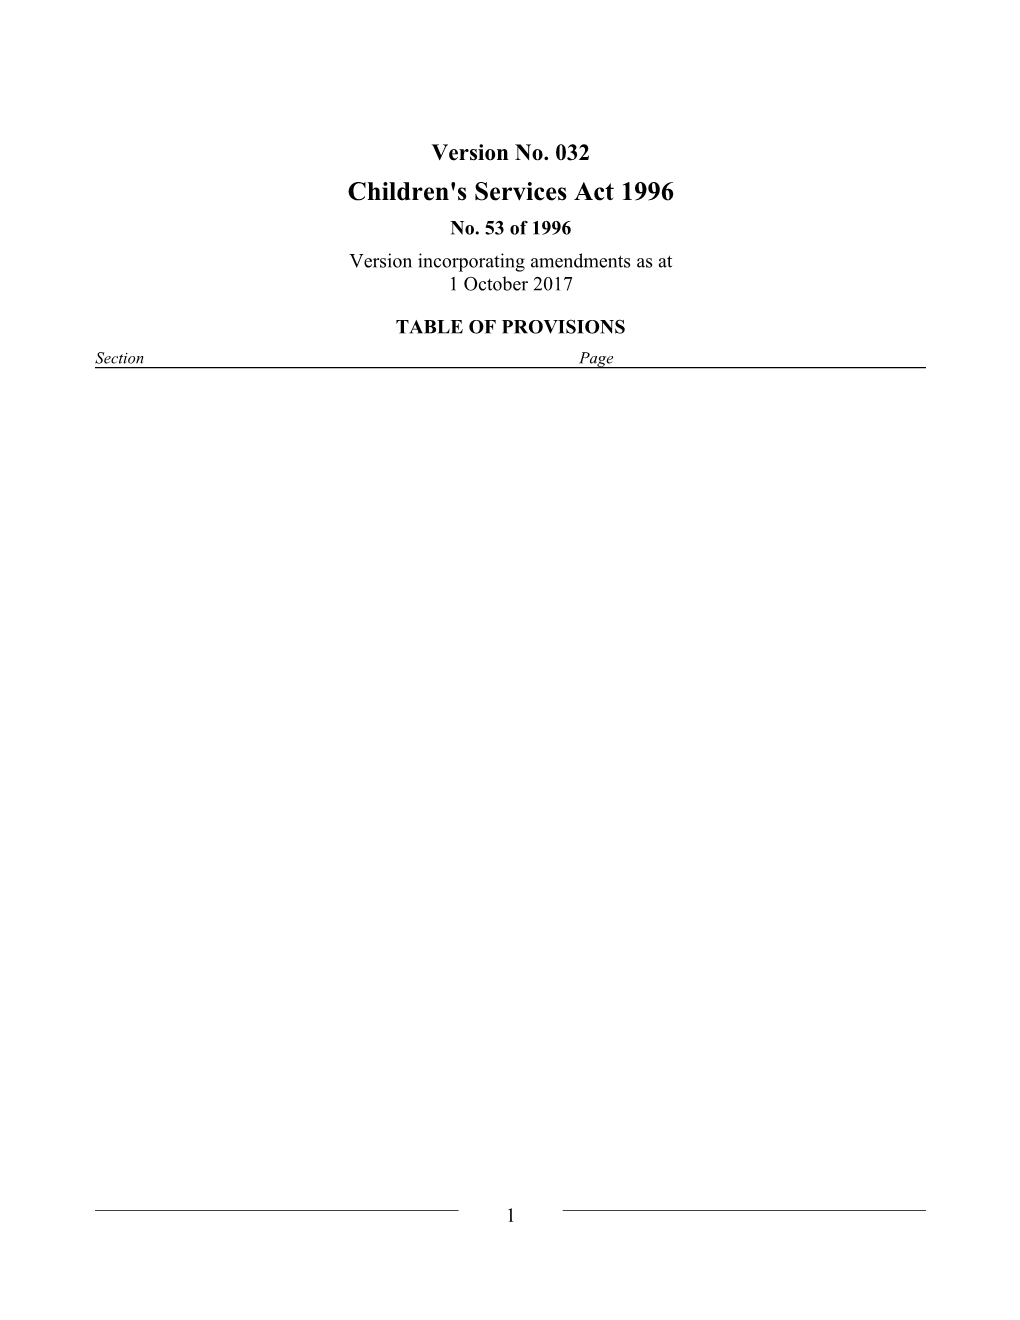 Children's Services Act 1996